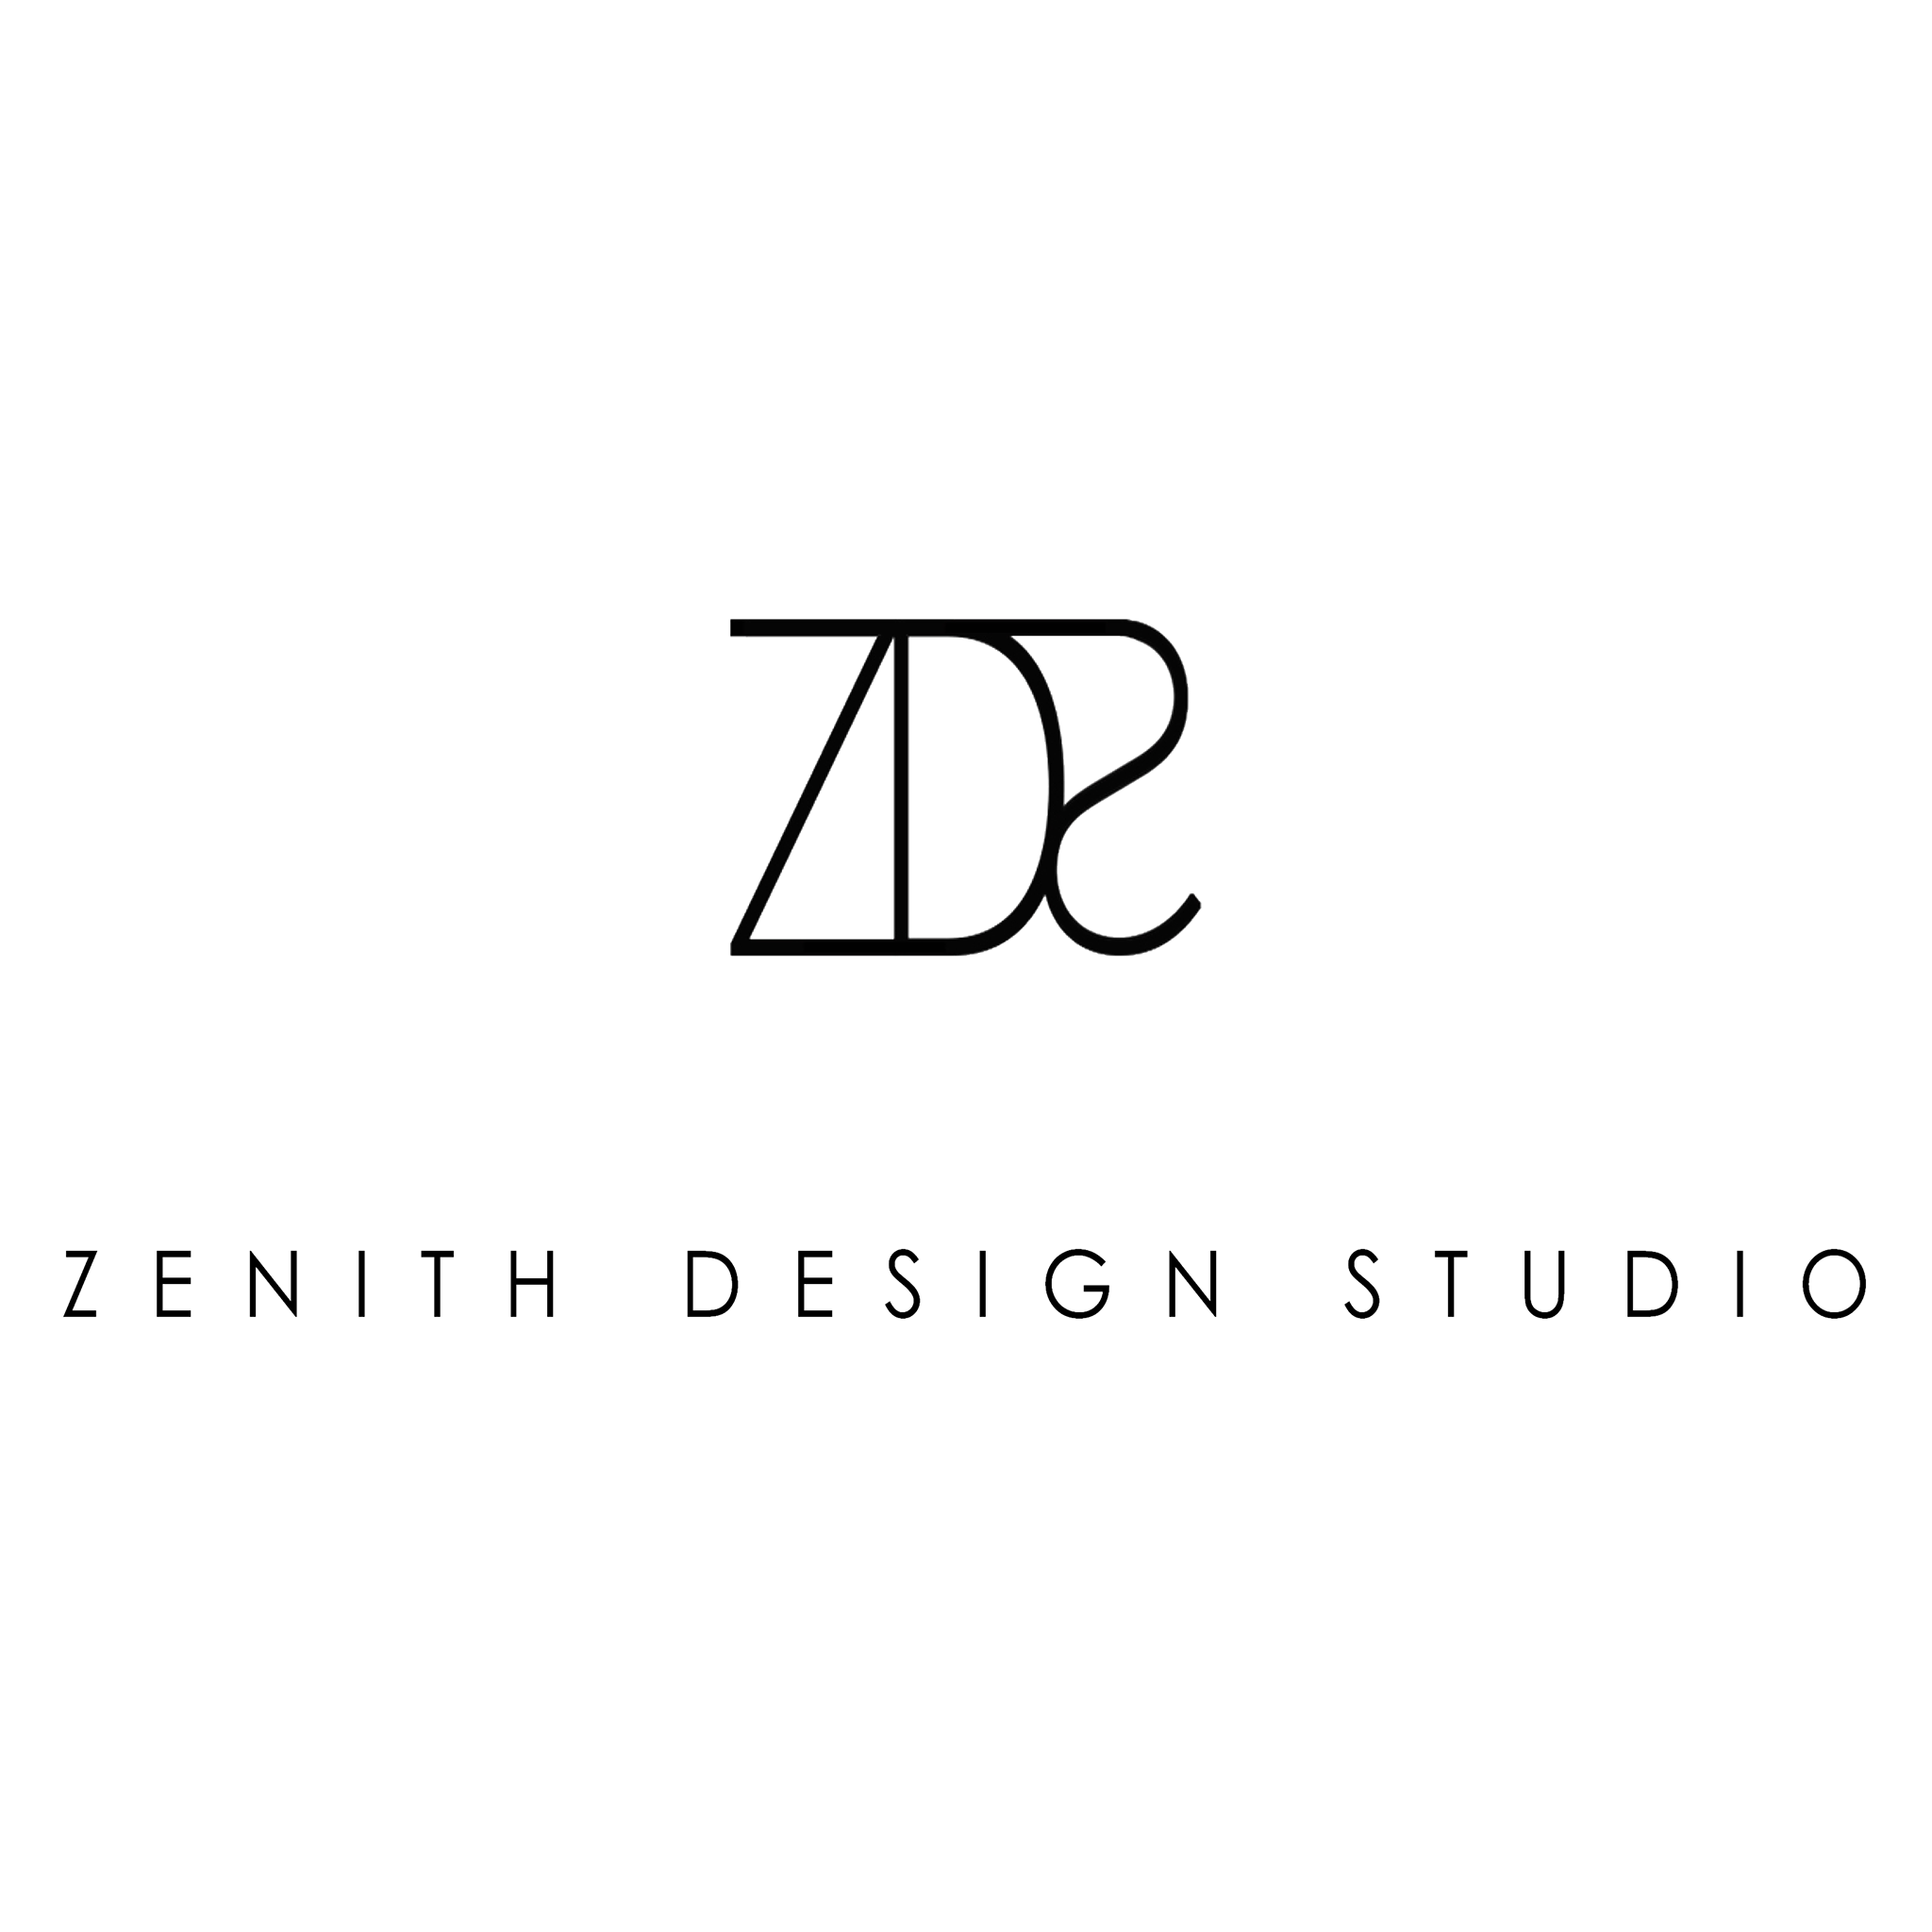 Zenith Design Studio|Architect|Professional Services